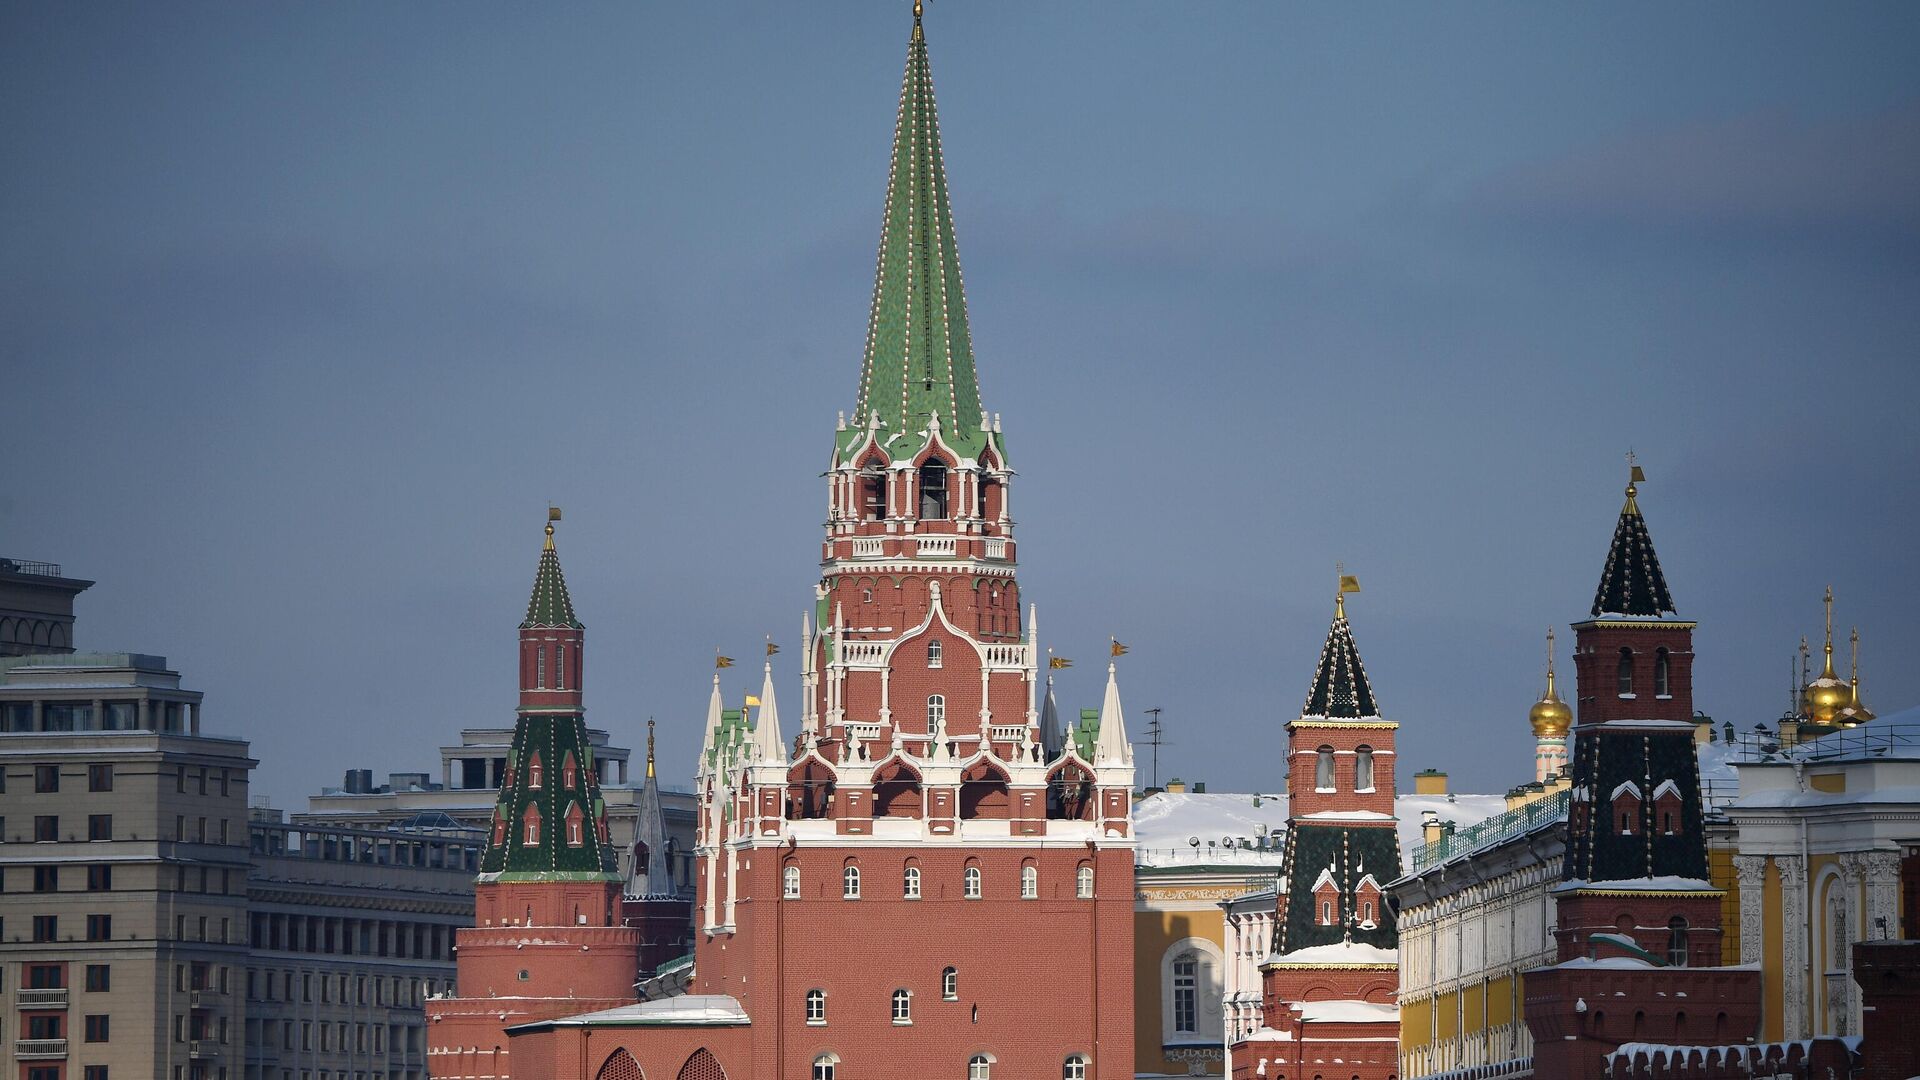 El Kremlin de Moscú, Rusia - Sputnik Mundo, 1920, 16.03.2021